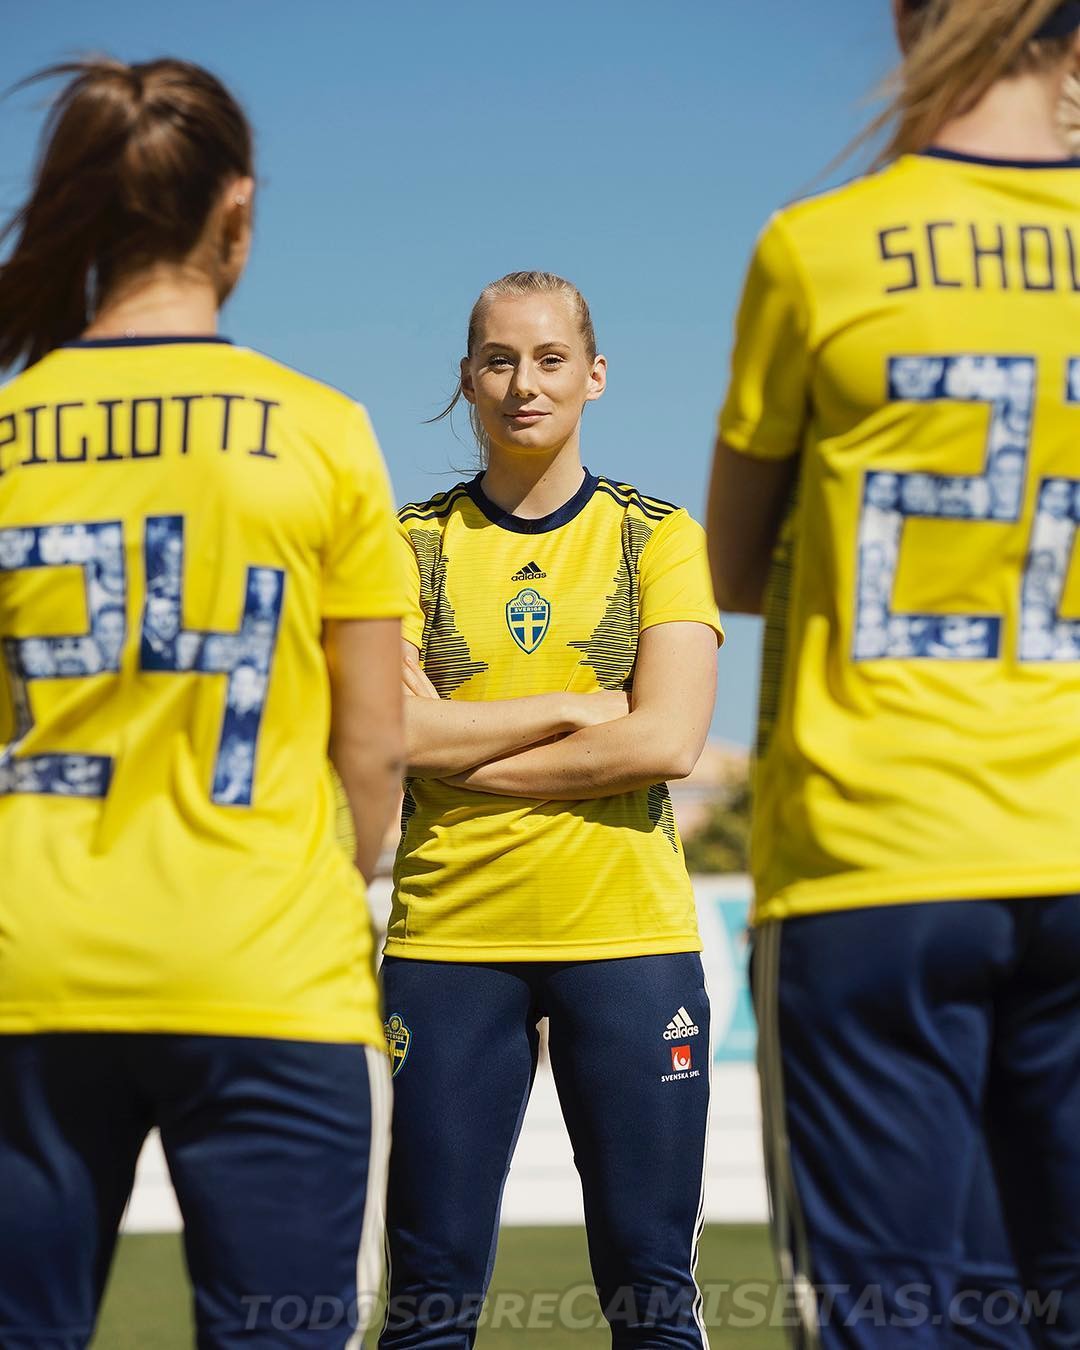 Sweden adidas Women's World Cup 2019 Kit